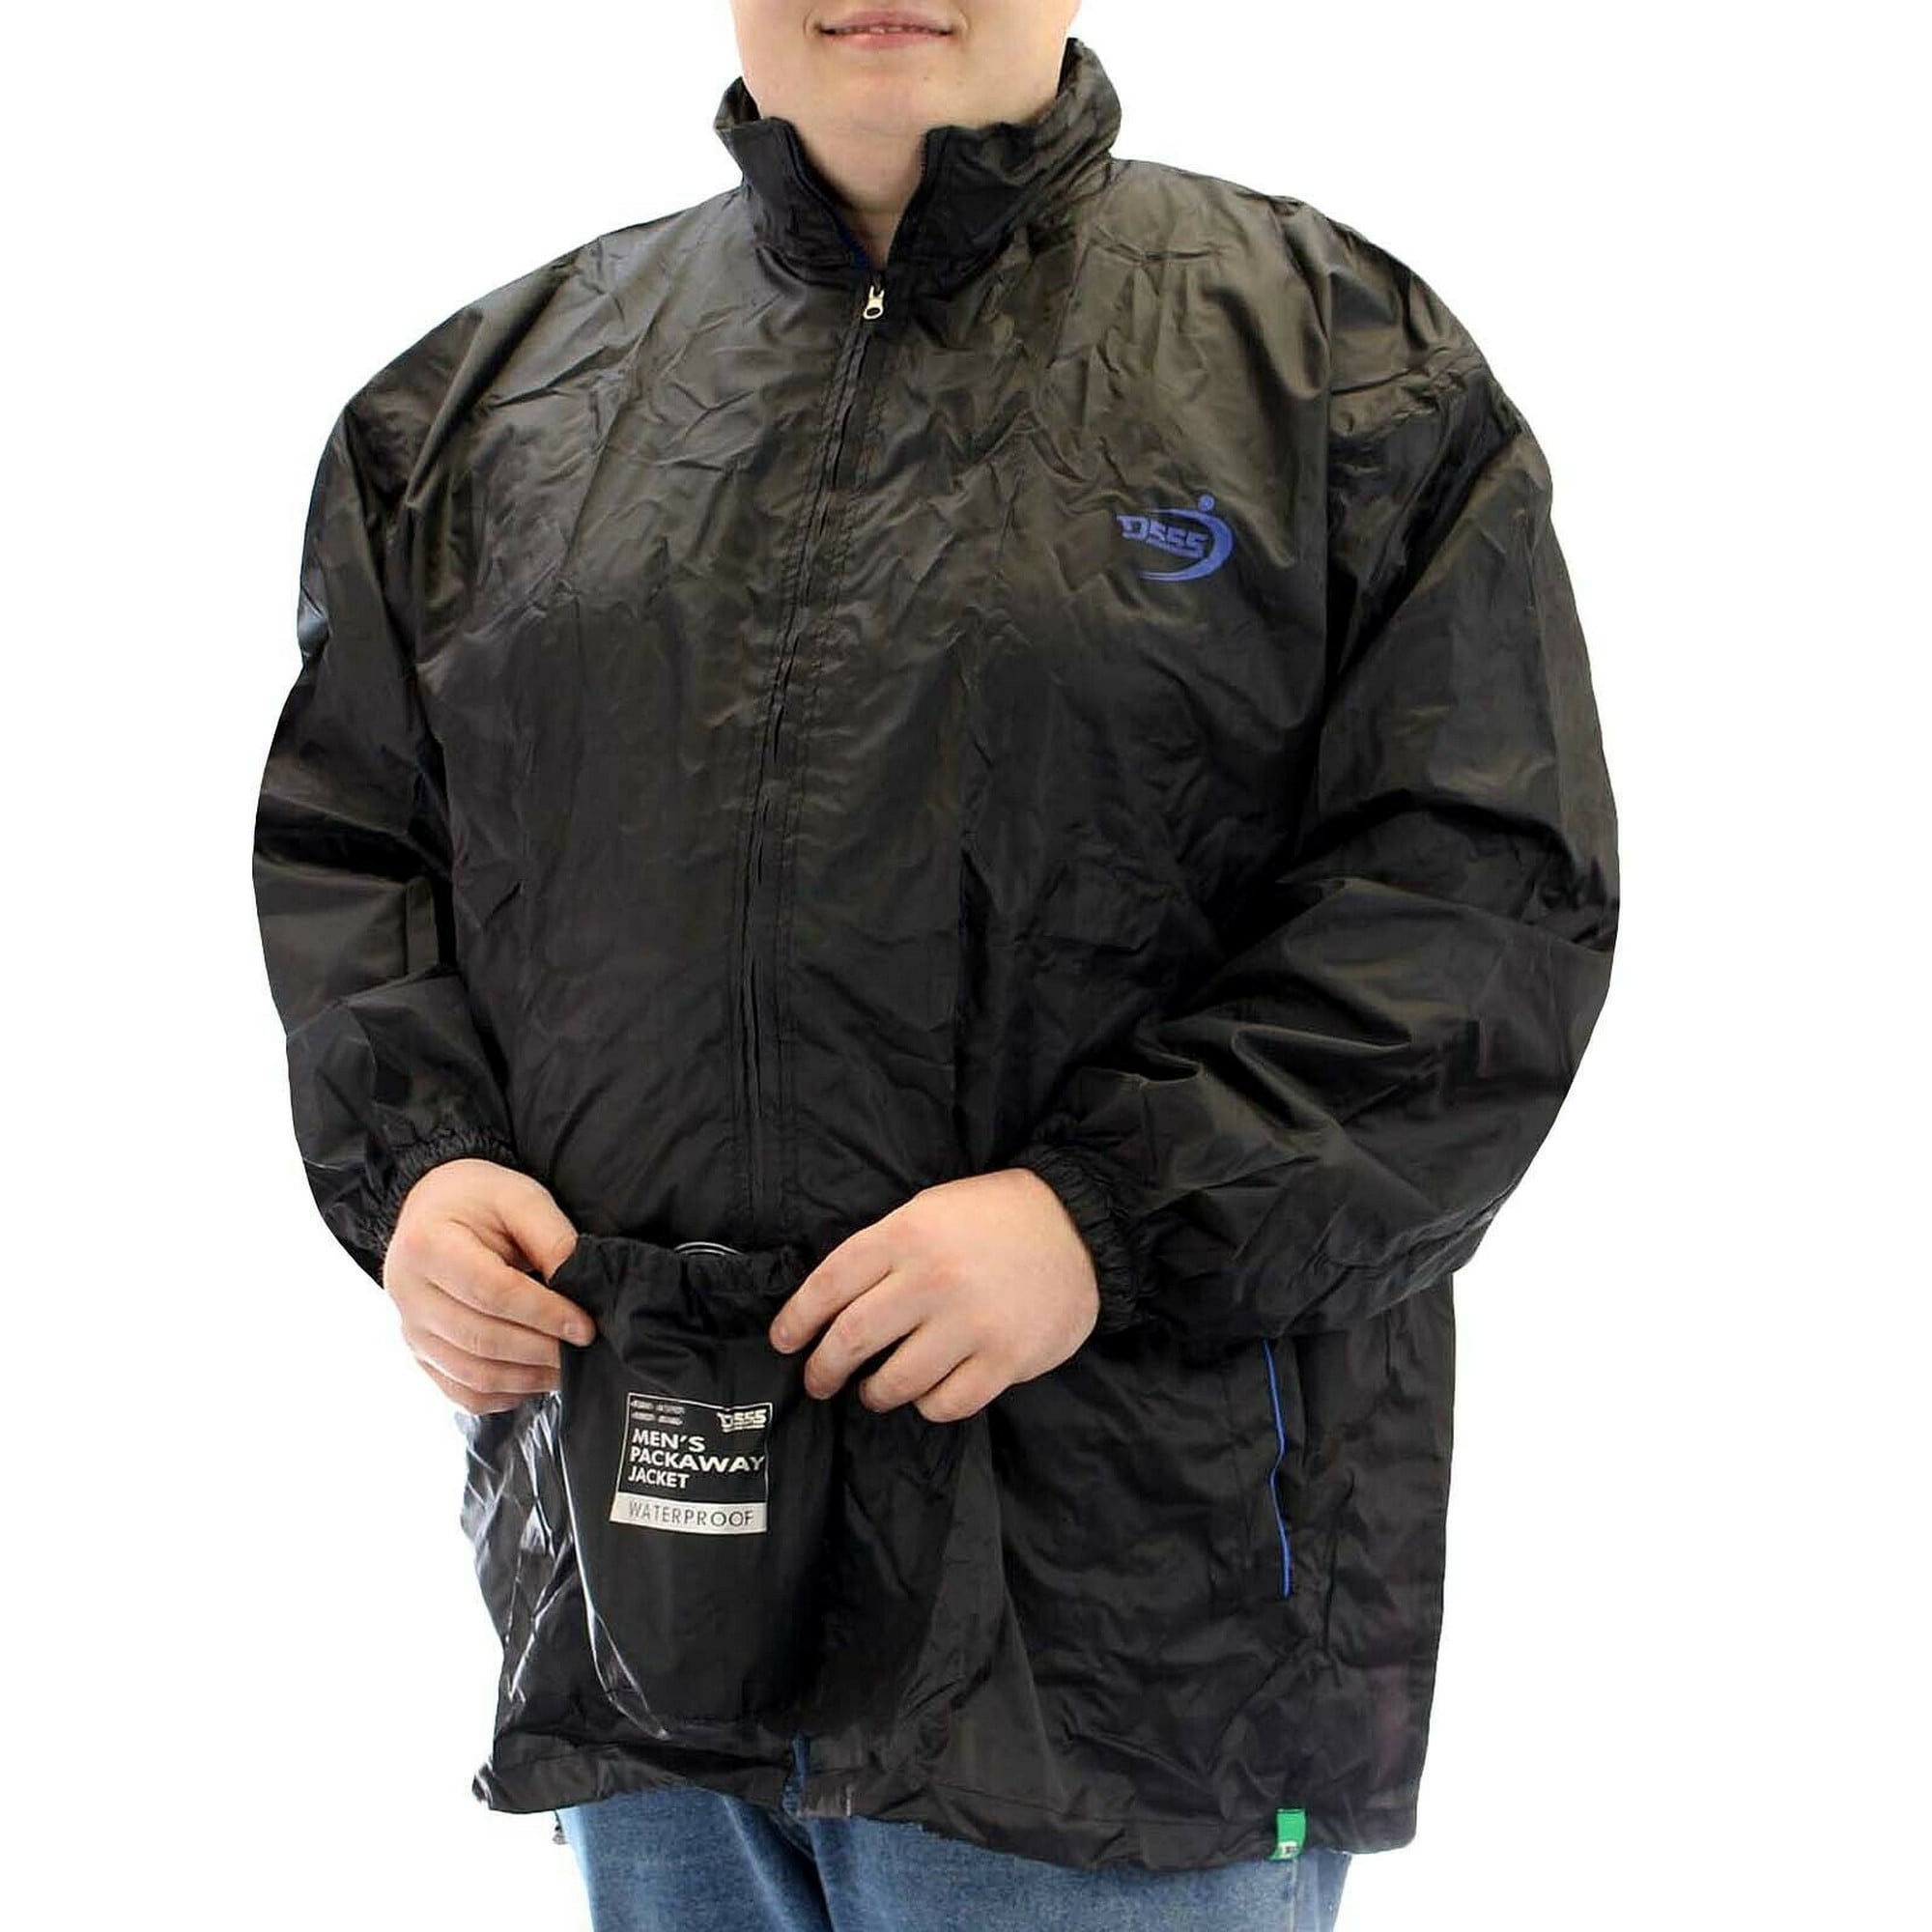 Mens Lightweight Waterproof Jacket Hiking Packaway Camping Garden Work Raincoat 